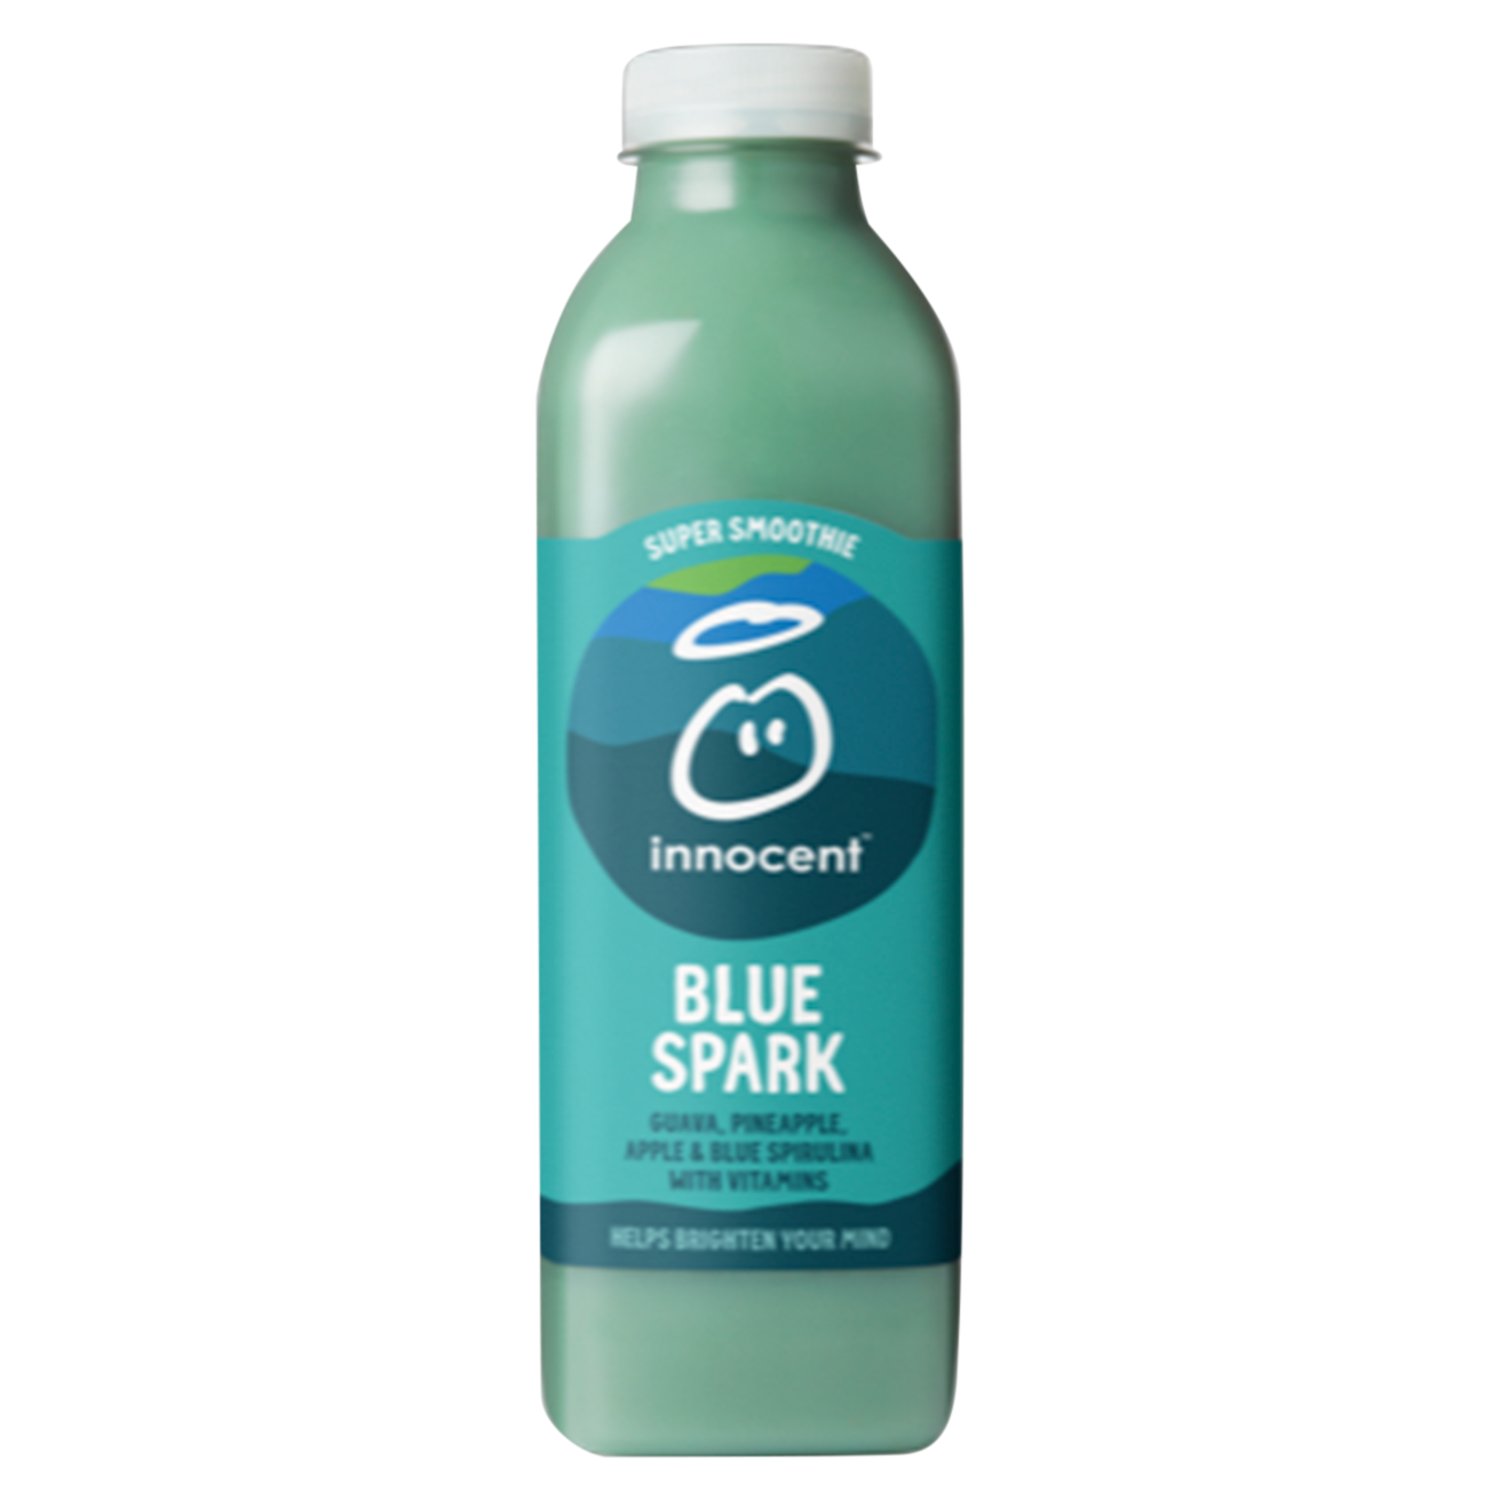 Innocent Blue Spark Super Smoothie (750 ml)